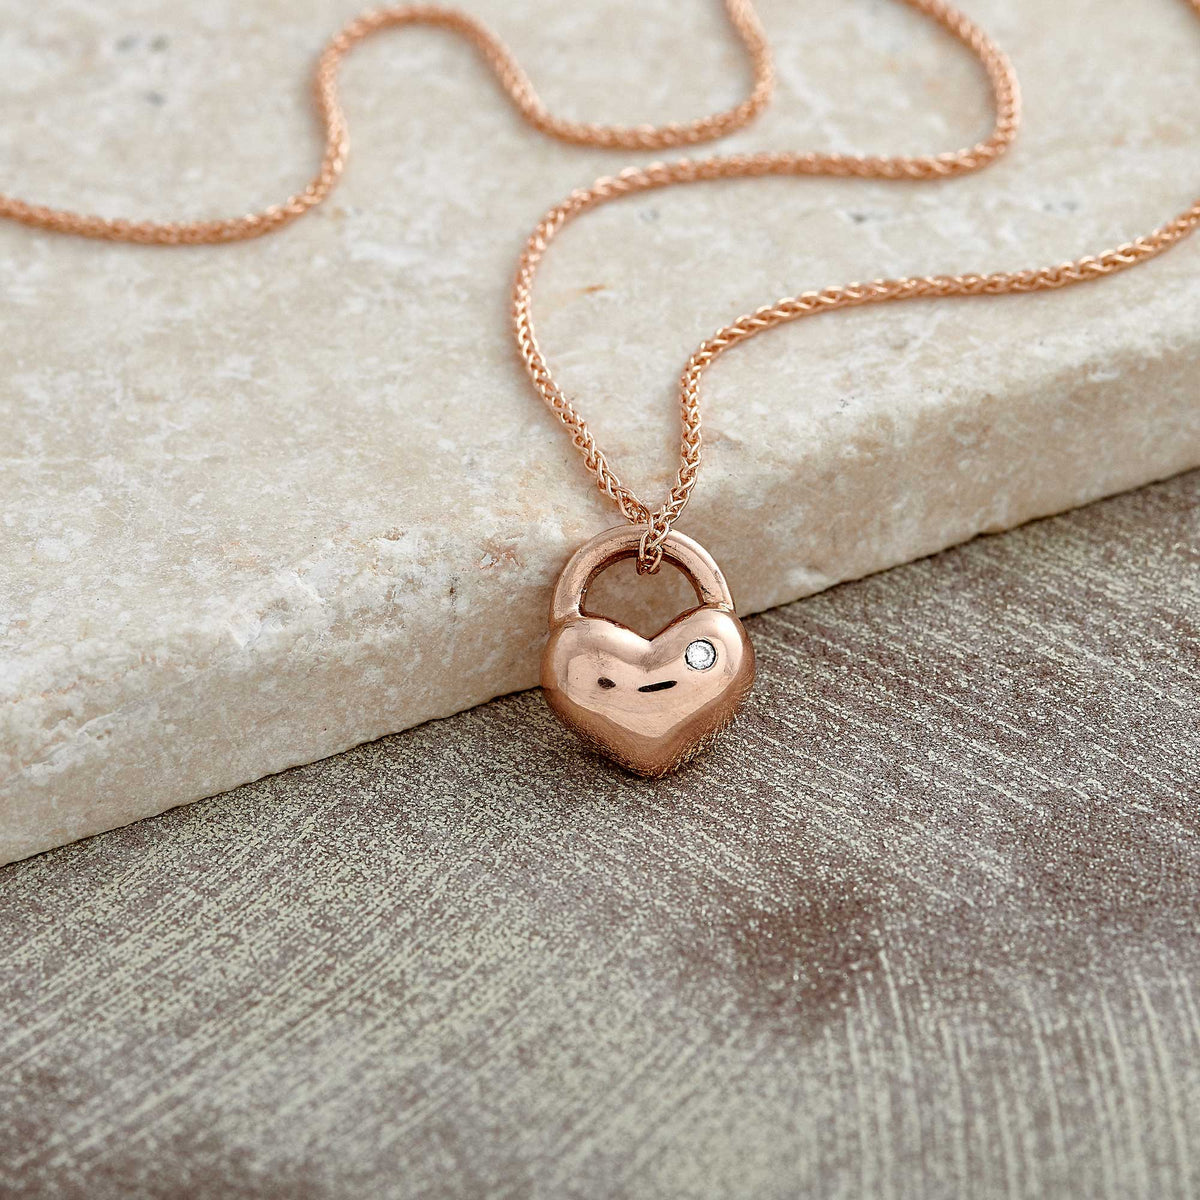 Rose gold heart necklace with diamond scarlett jewelleryRose gold heart necklace with diamond scarlett jewellery